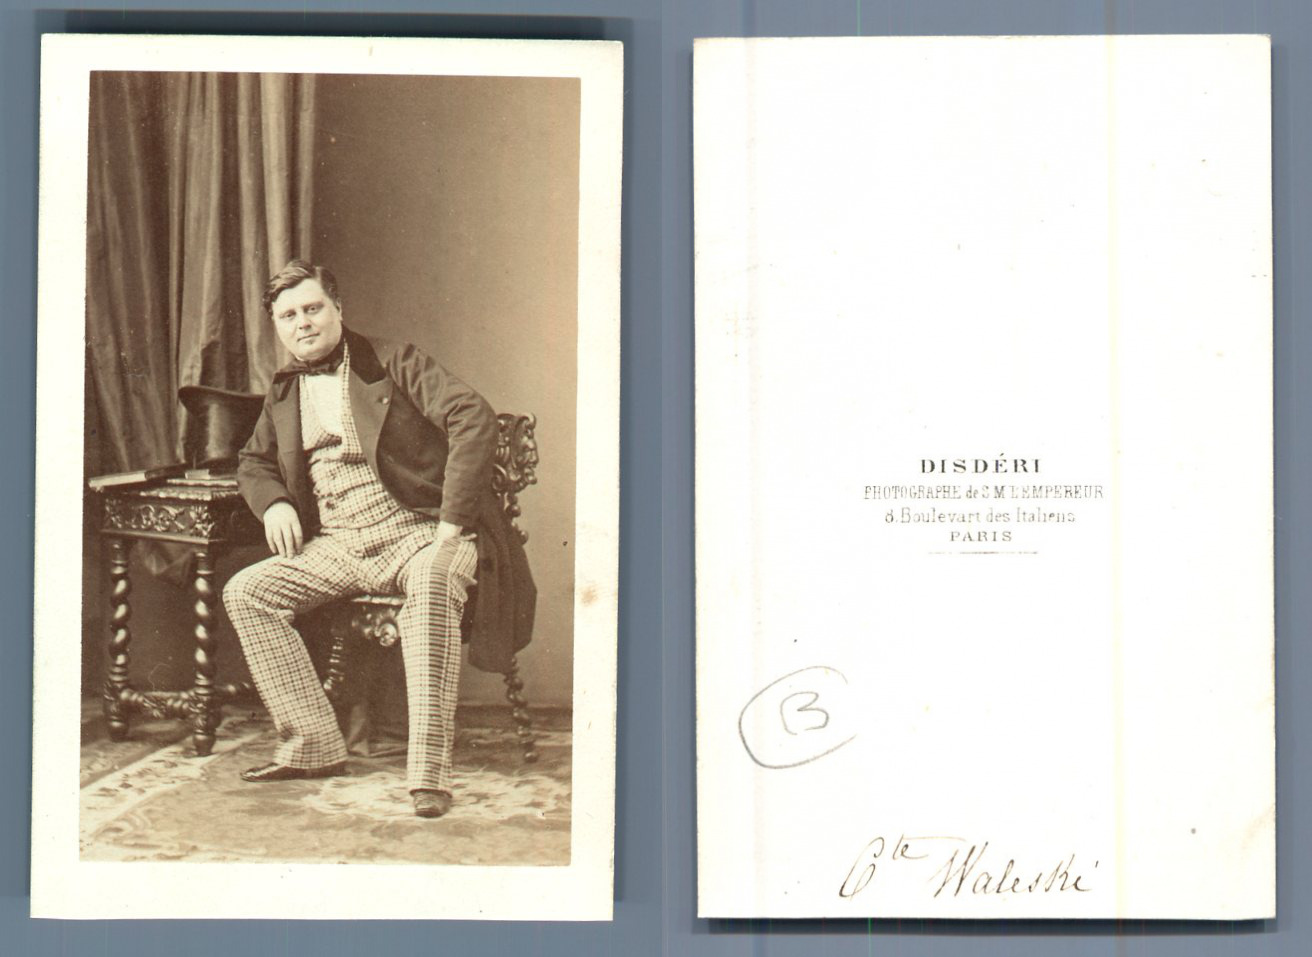 Disderi, Paris, Count Walewski Vintage Albumen Print.Alexandre Florian Joseph 